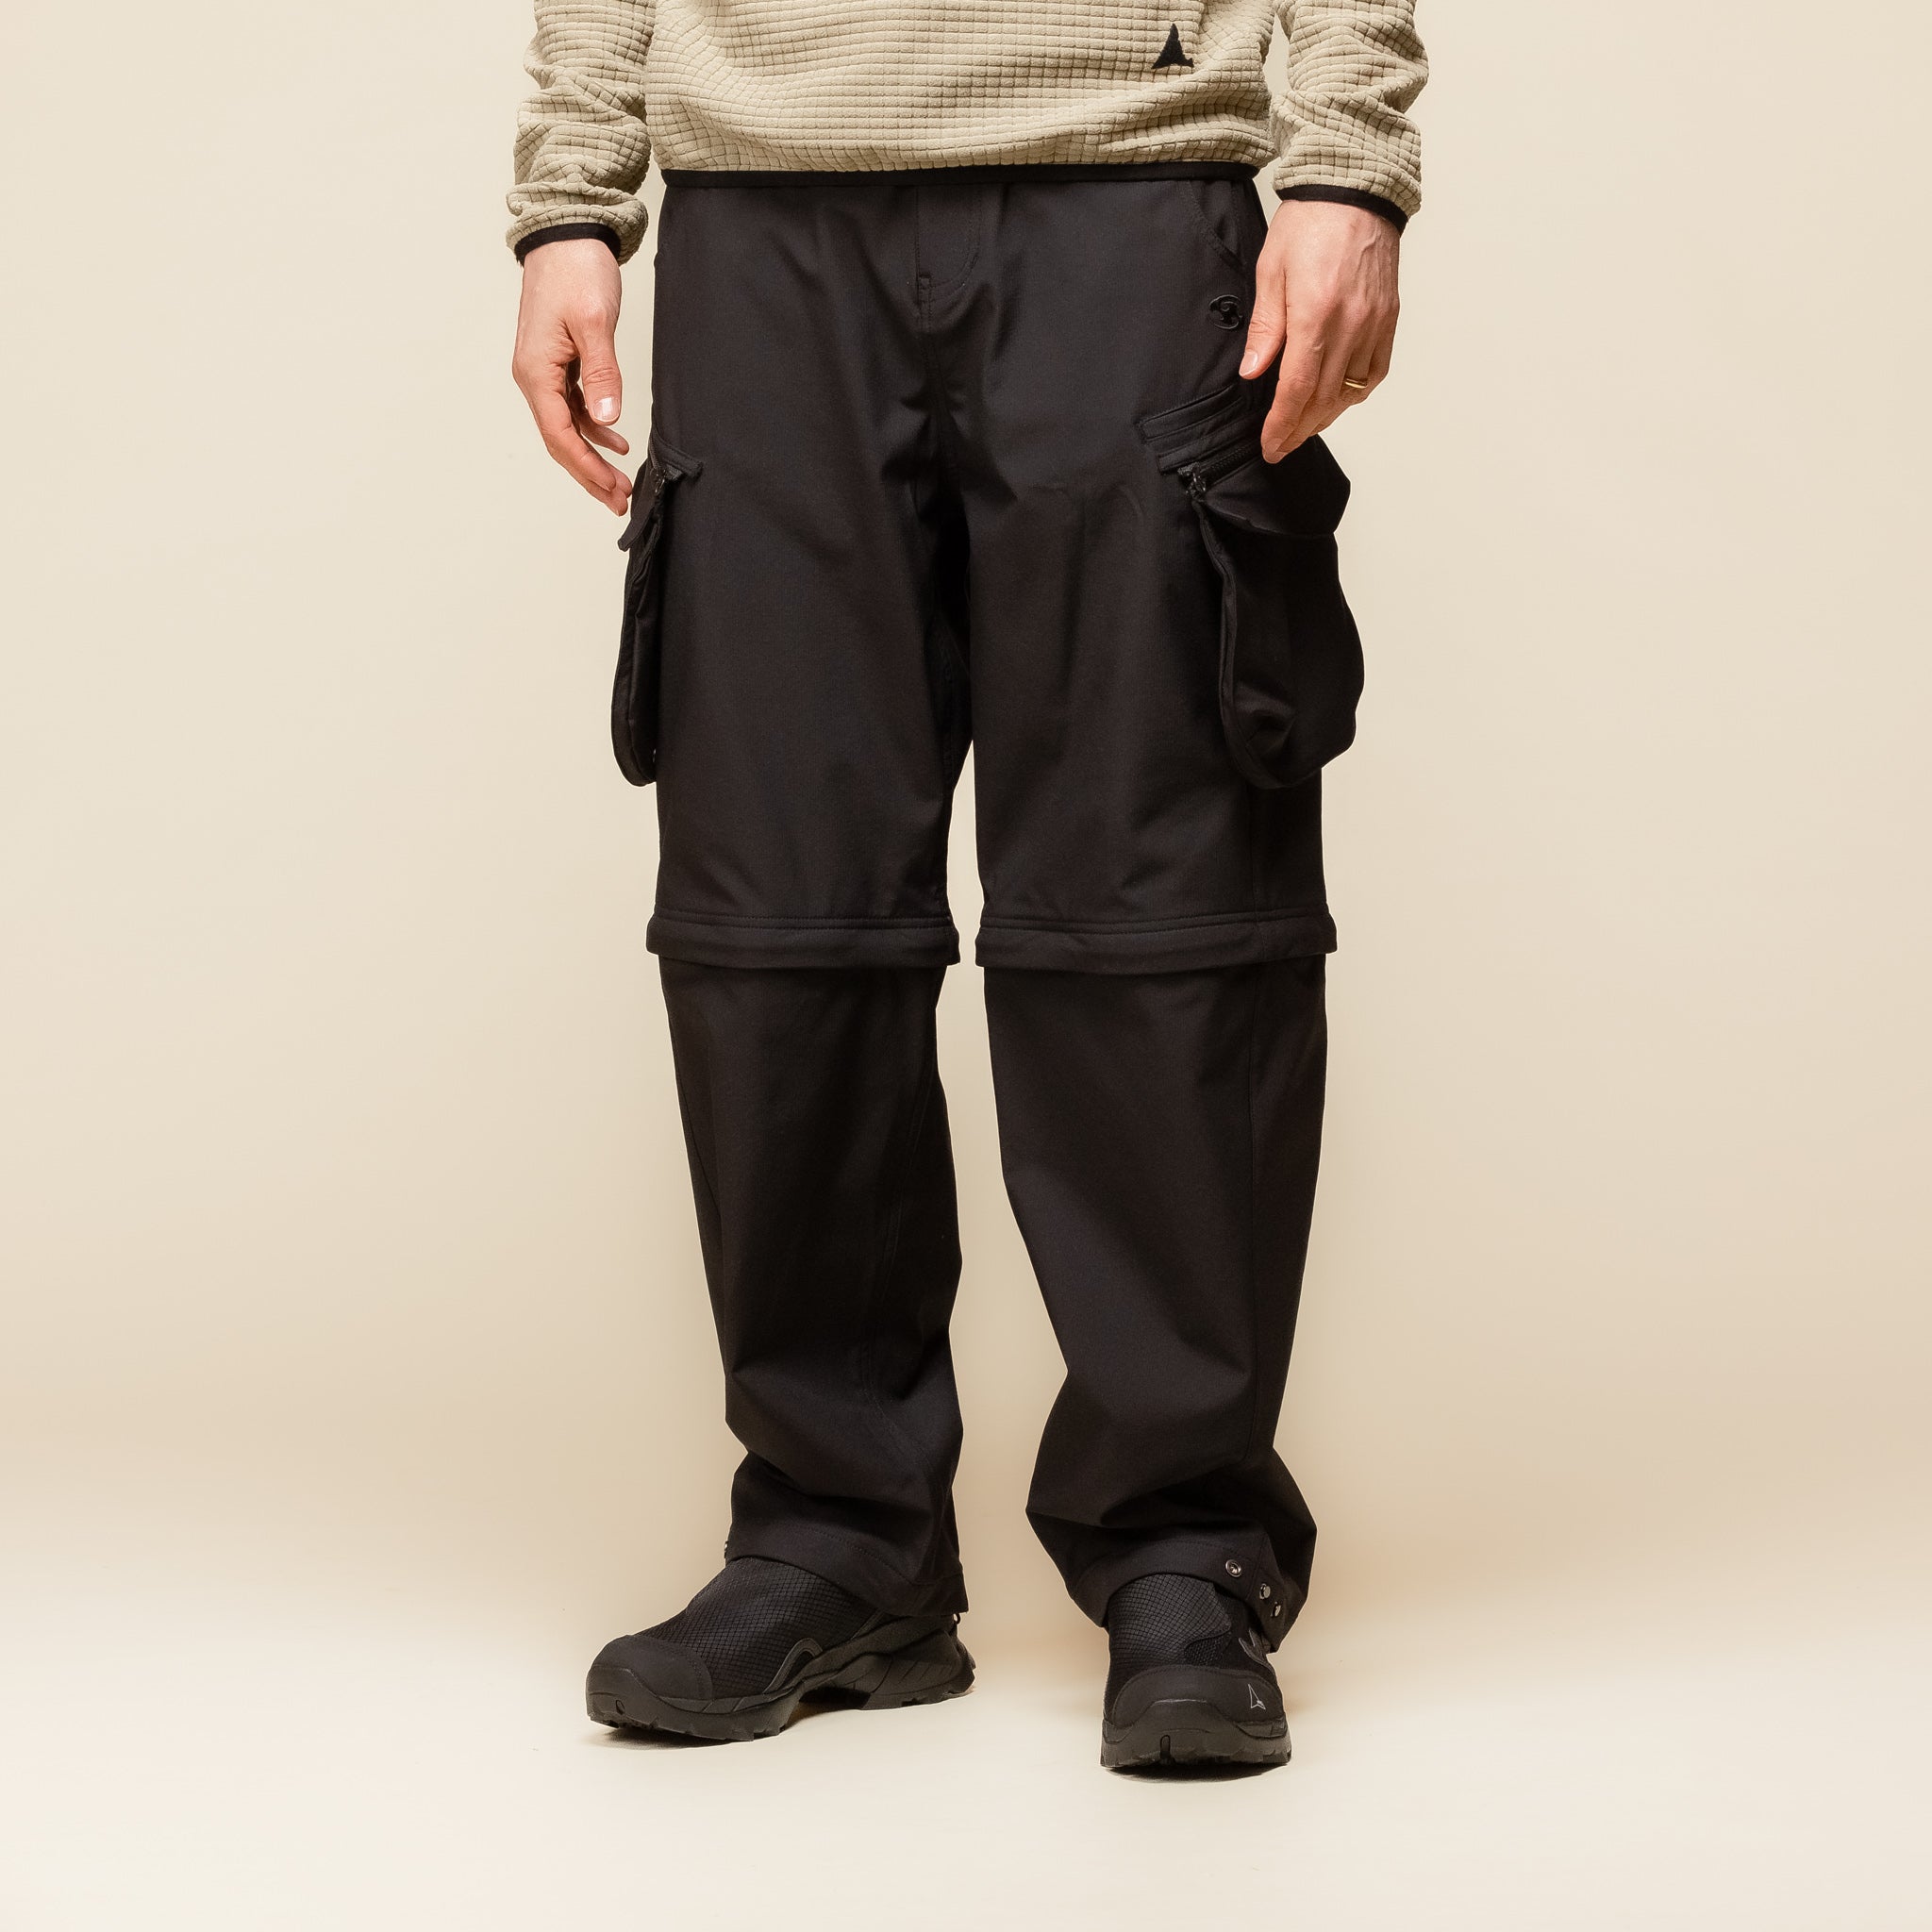 VNGROCOMTHA San San Gear - 2 Way Pocket Pants - Black